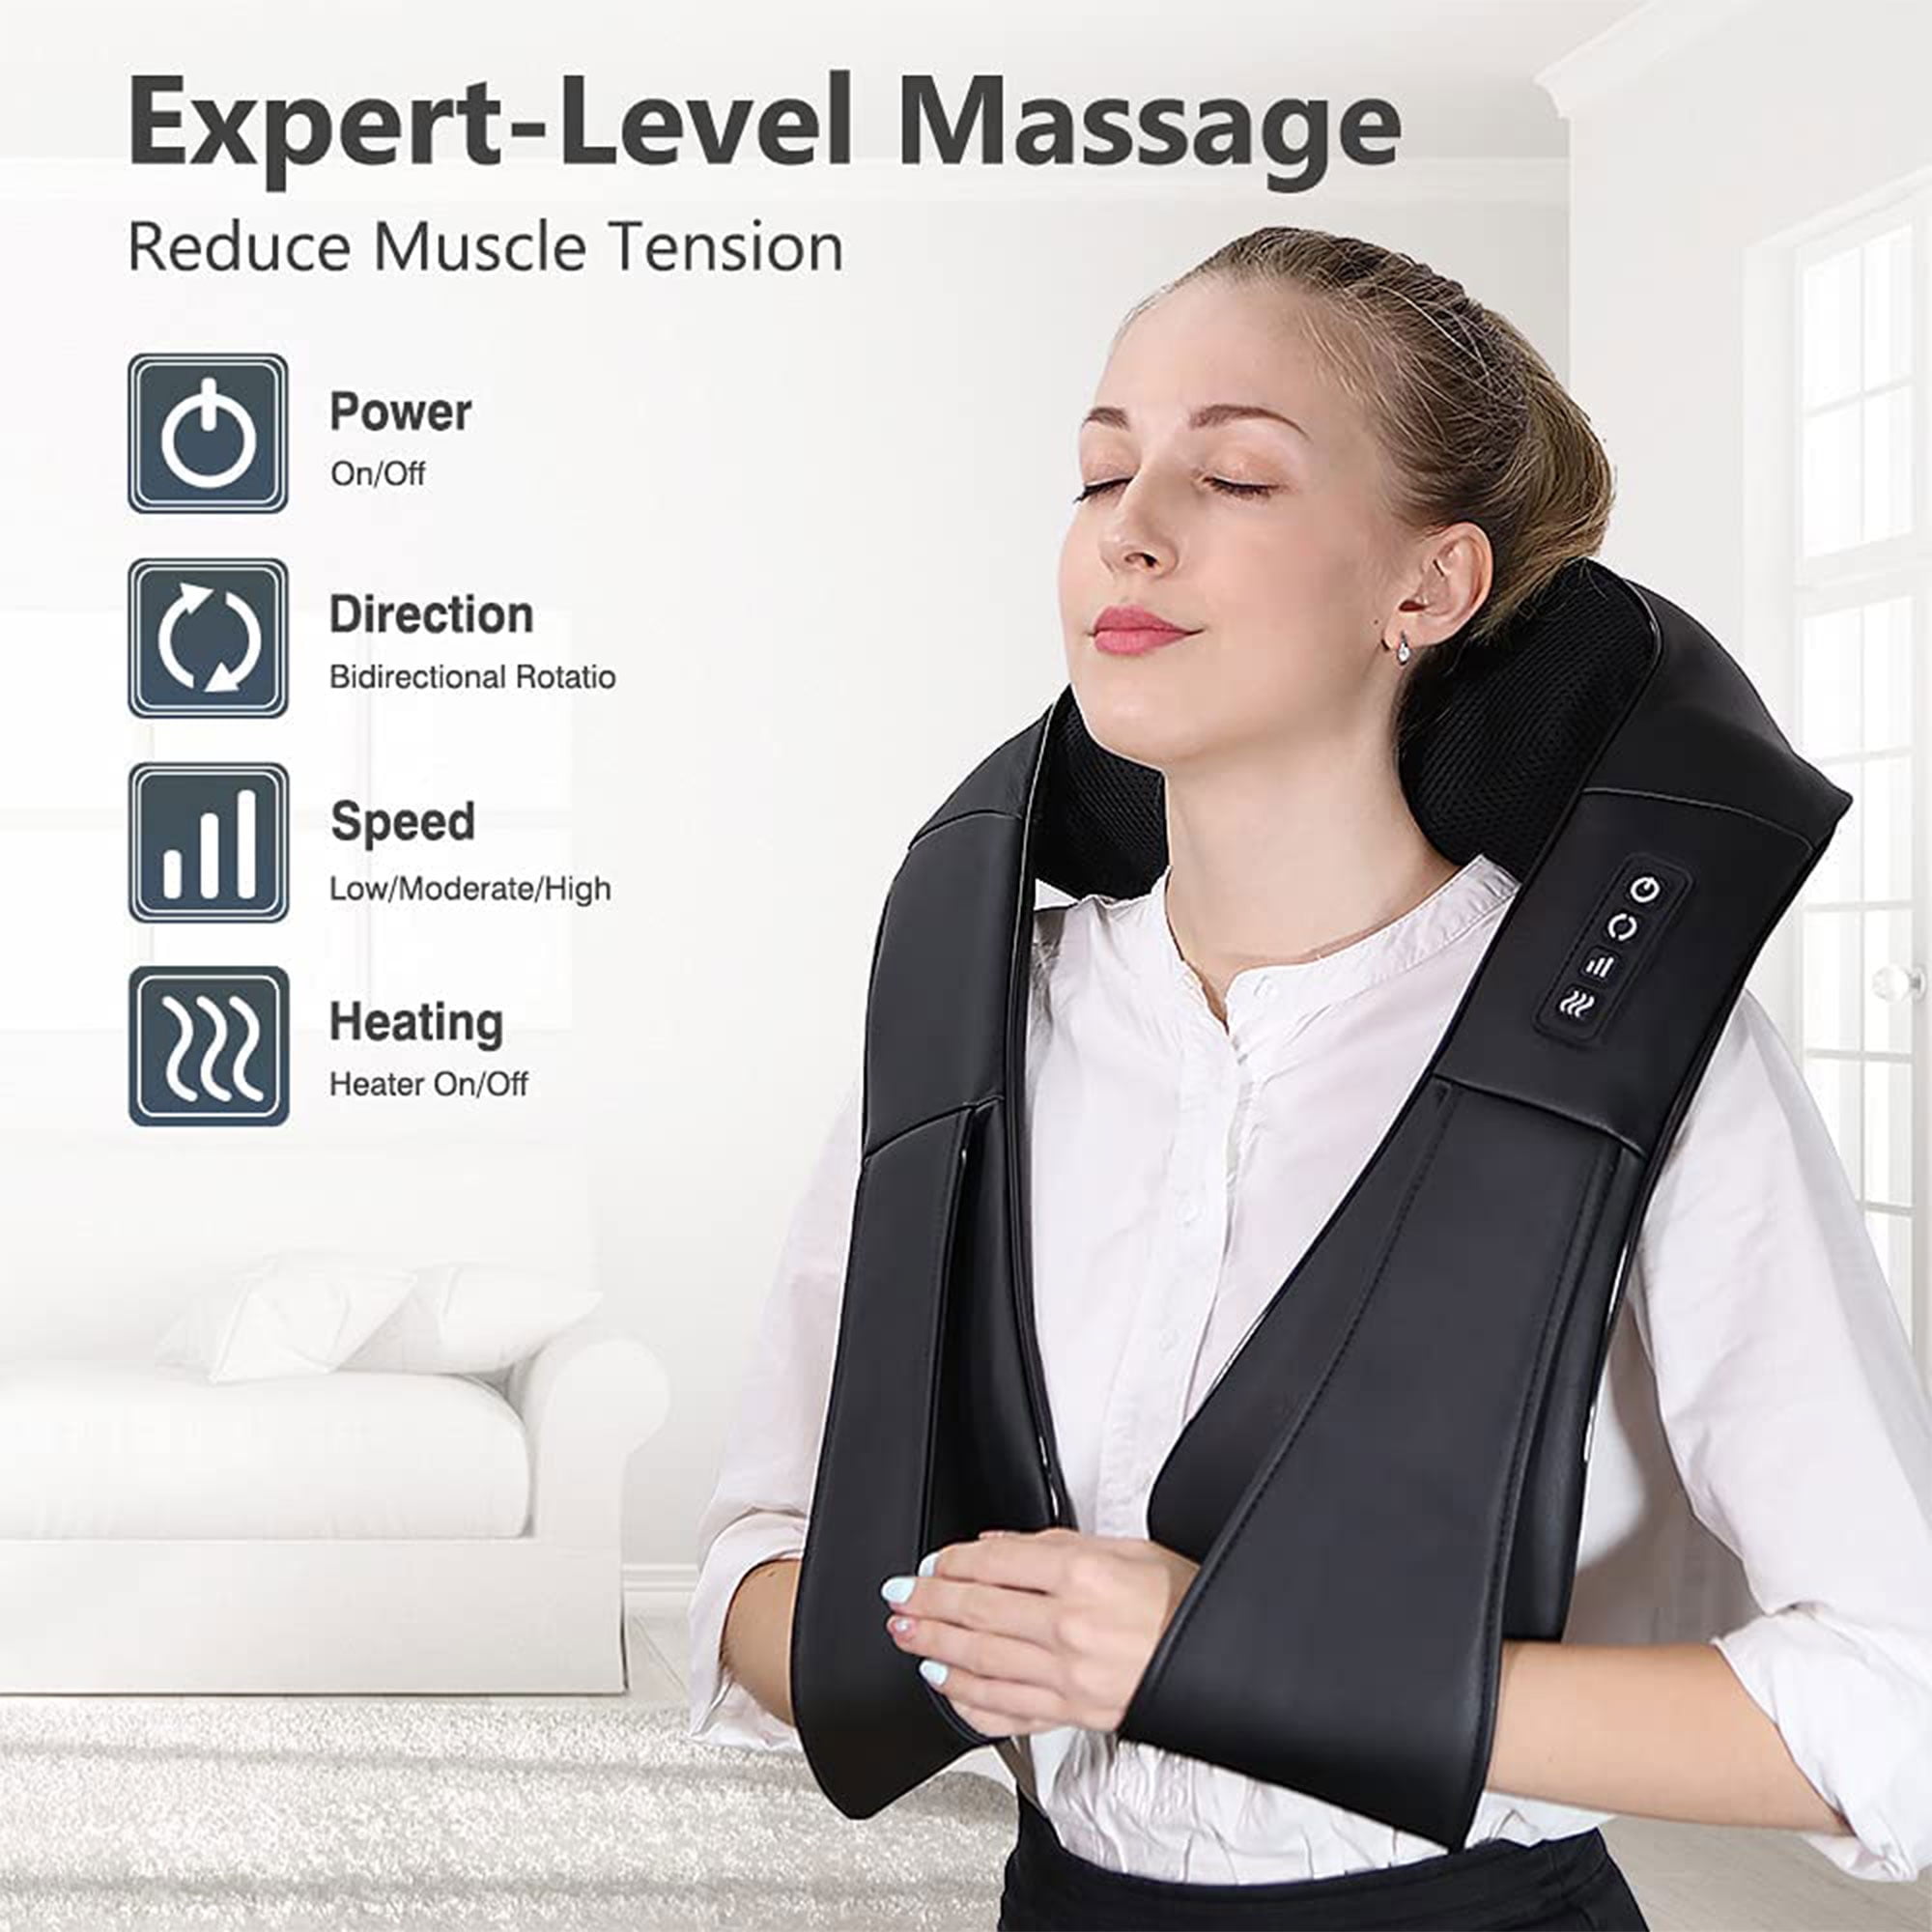 Relaxie Shiatsu Neck & Back Massager With Heat - Medicpure